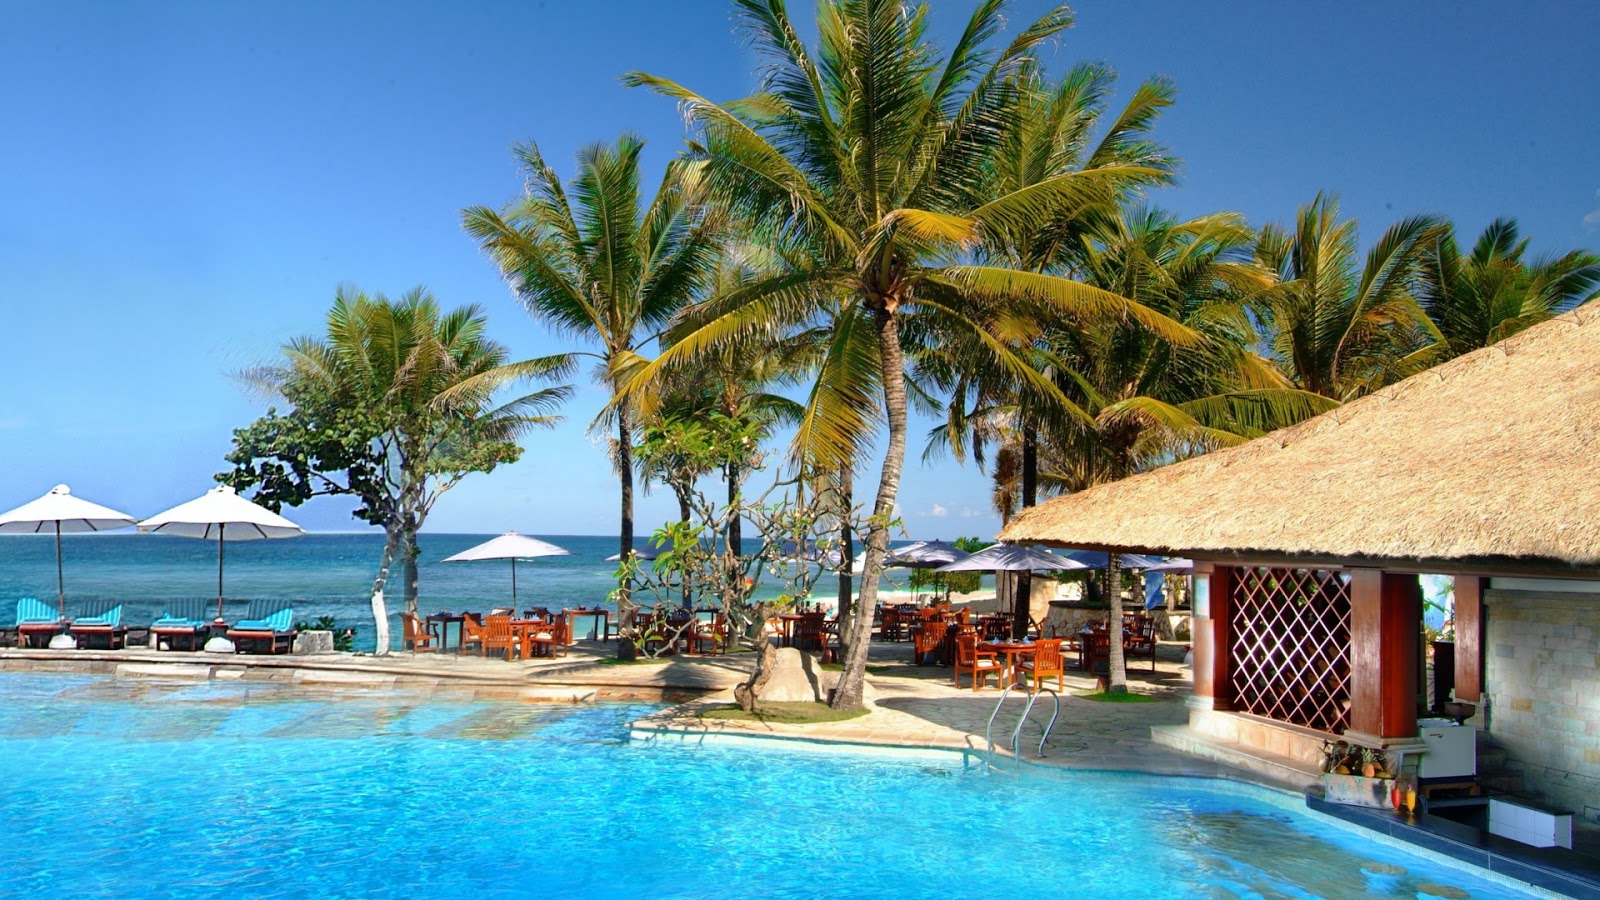 Let's vacation to Bali The paradise island | Bali Vacations